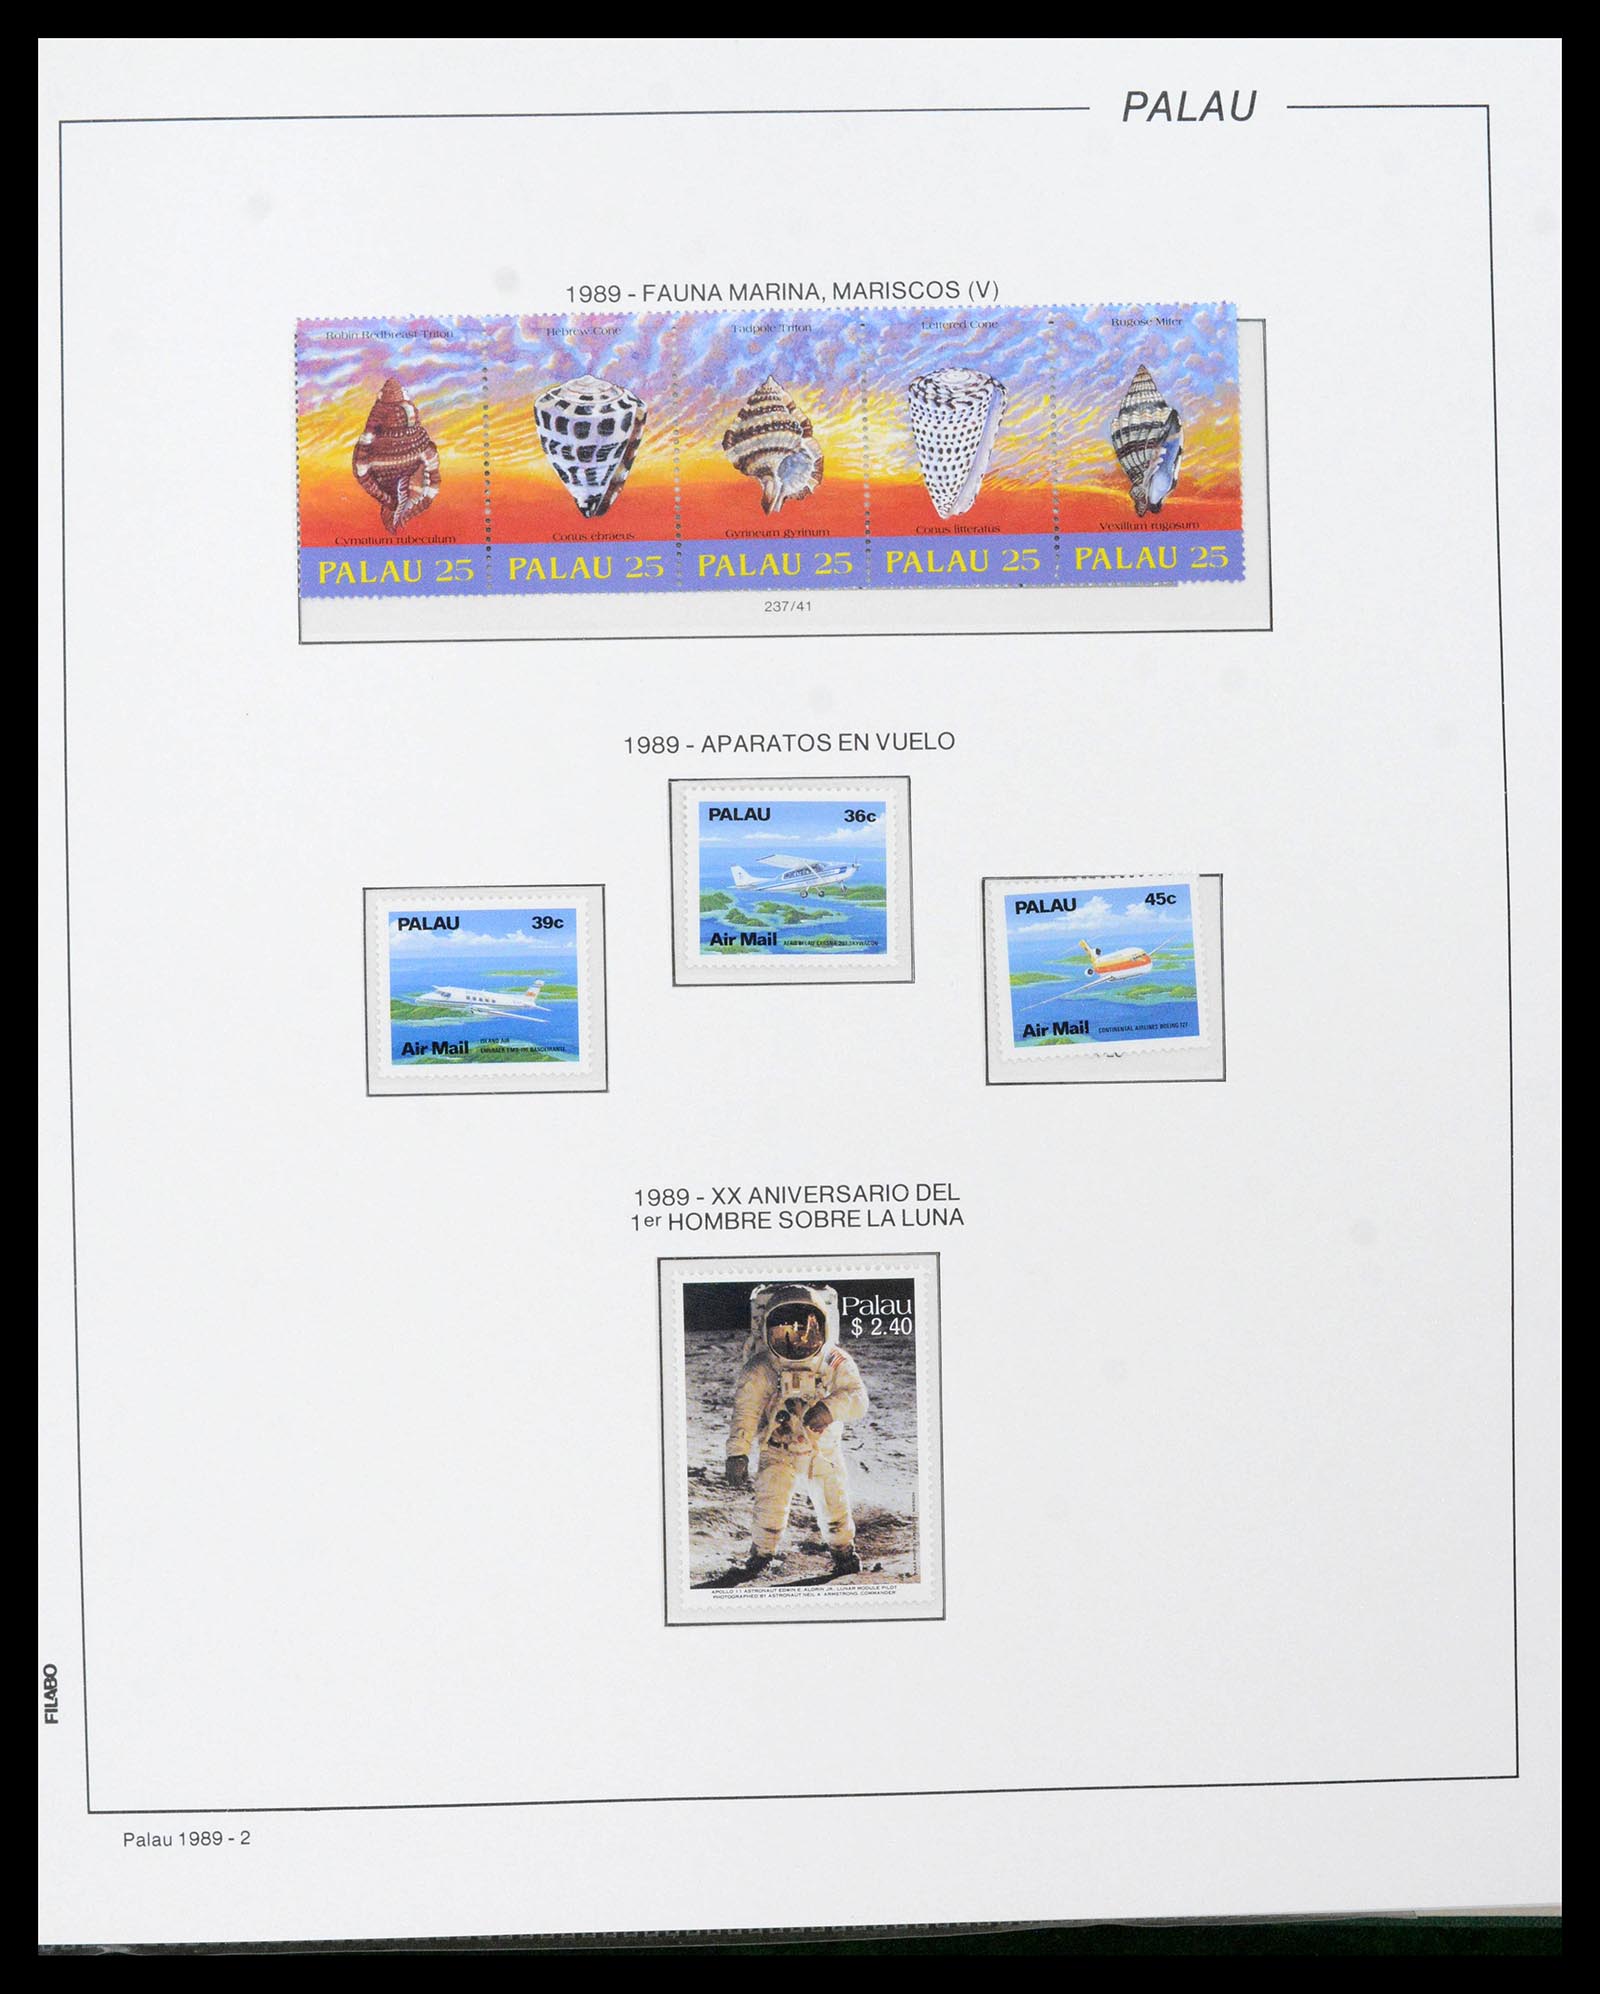 39222 0027 - Stamp collection 39222 Palau, Micronesia and Marshall islands 1980-1995.